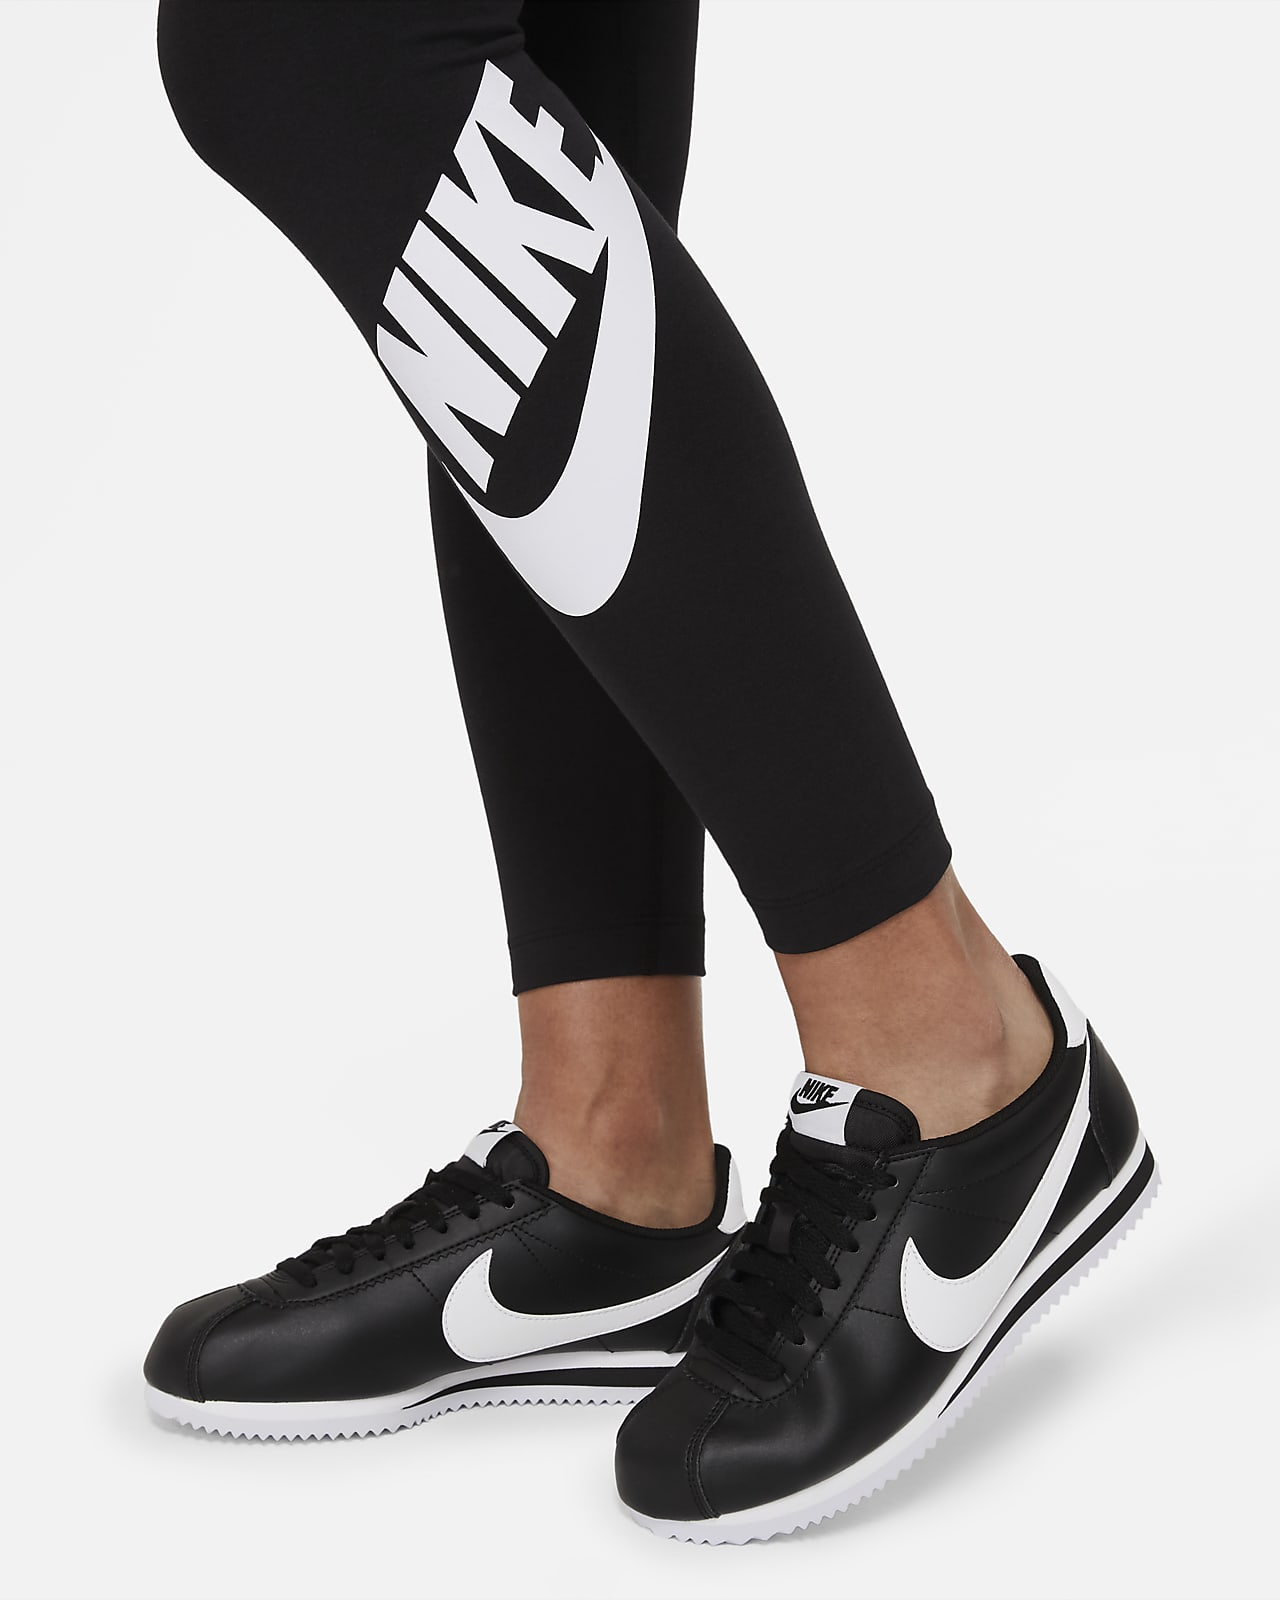 Women's Legging Nike sportswear essential - Nike - Brands - Lifestyle